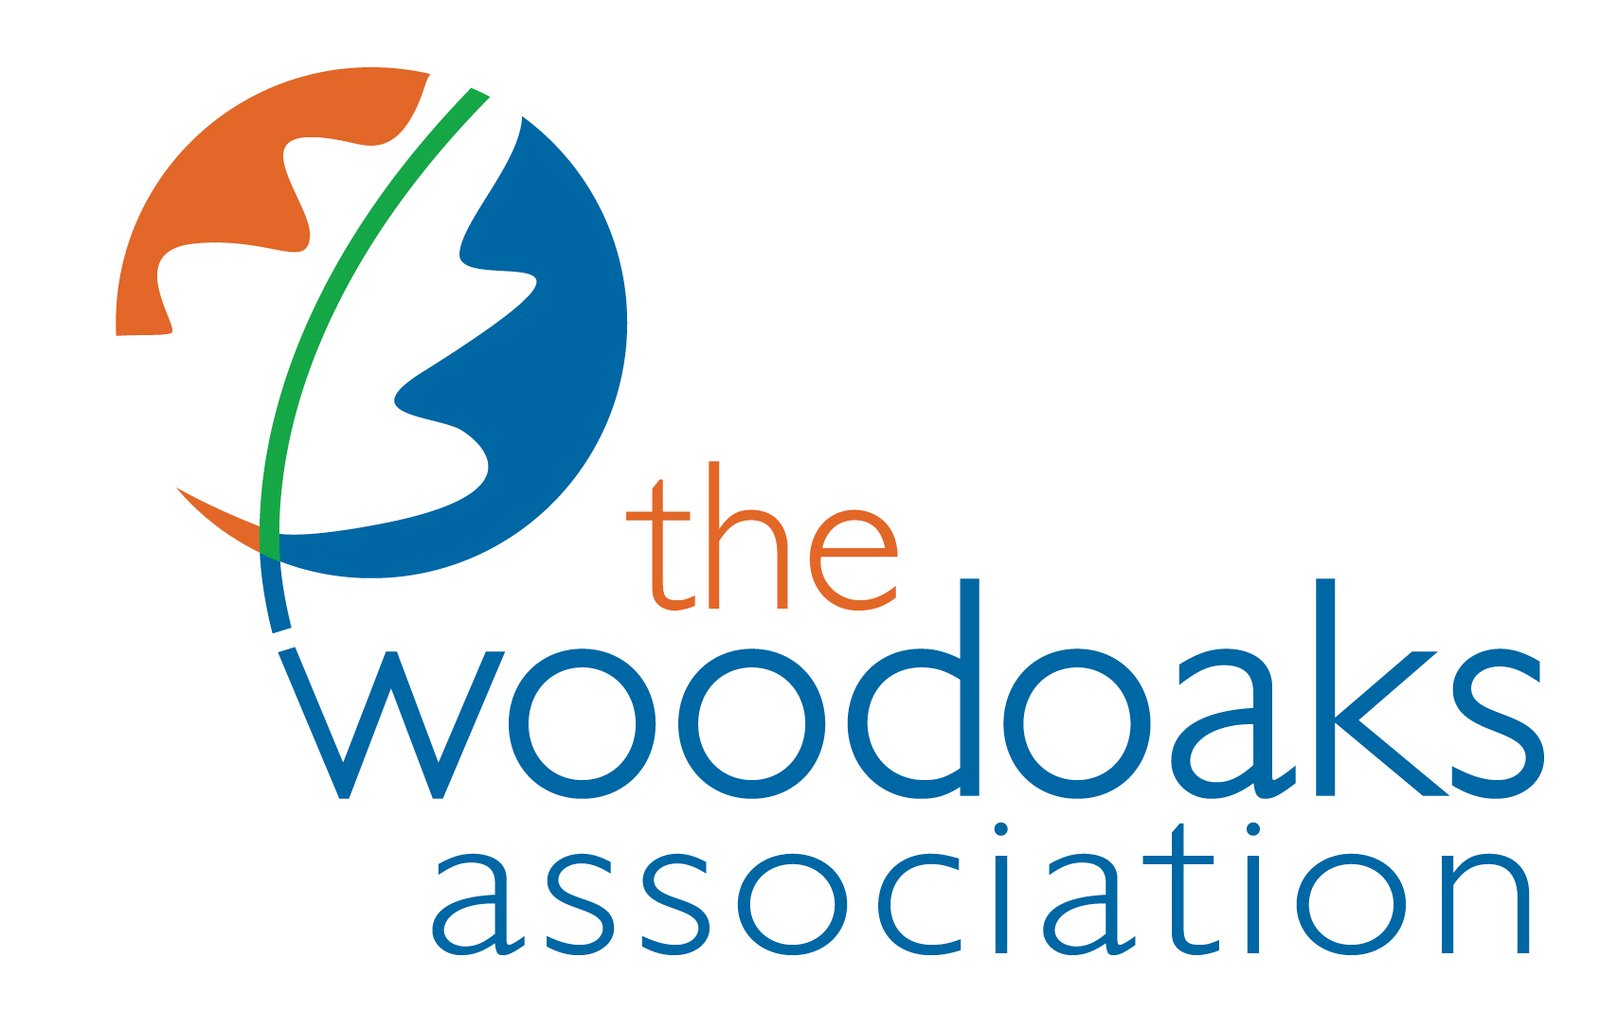 The Woodoaks Association